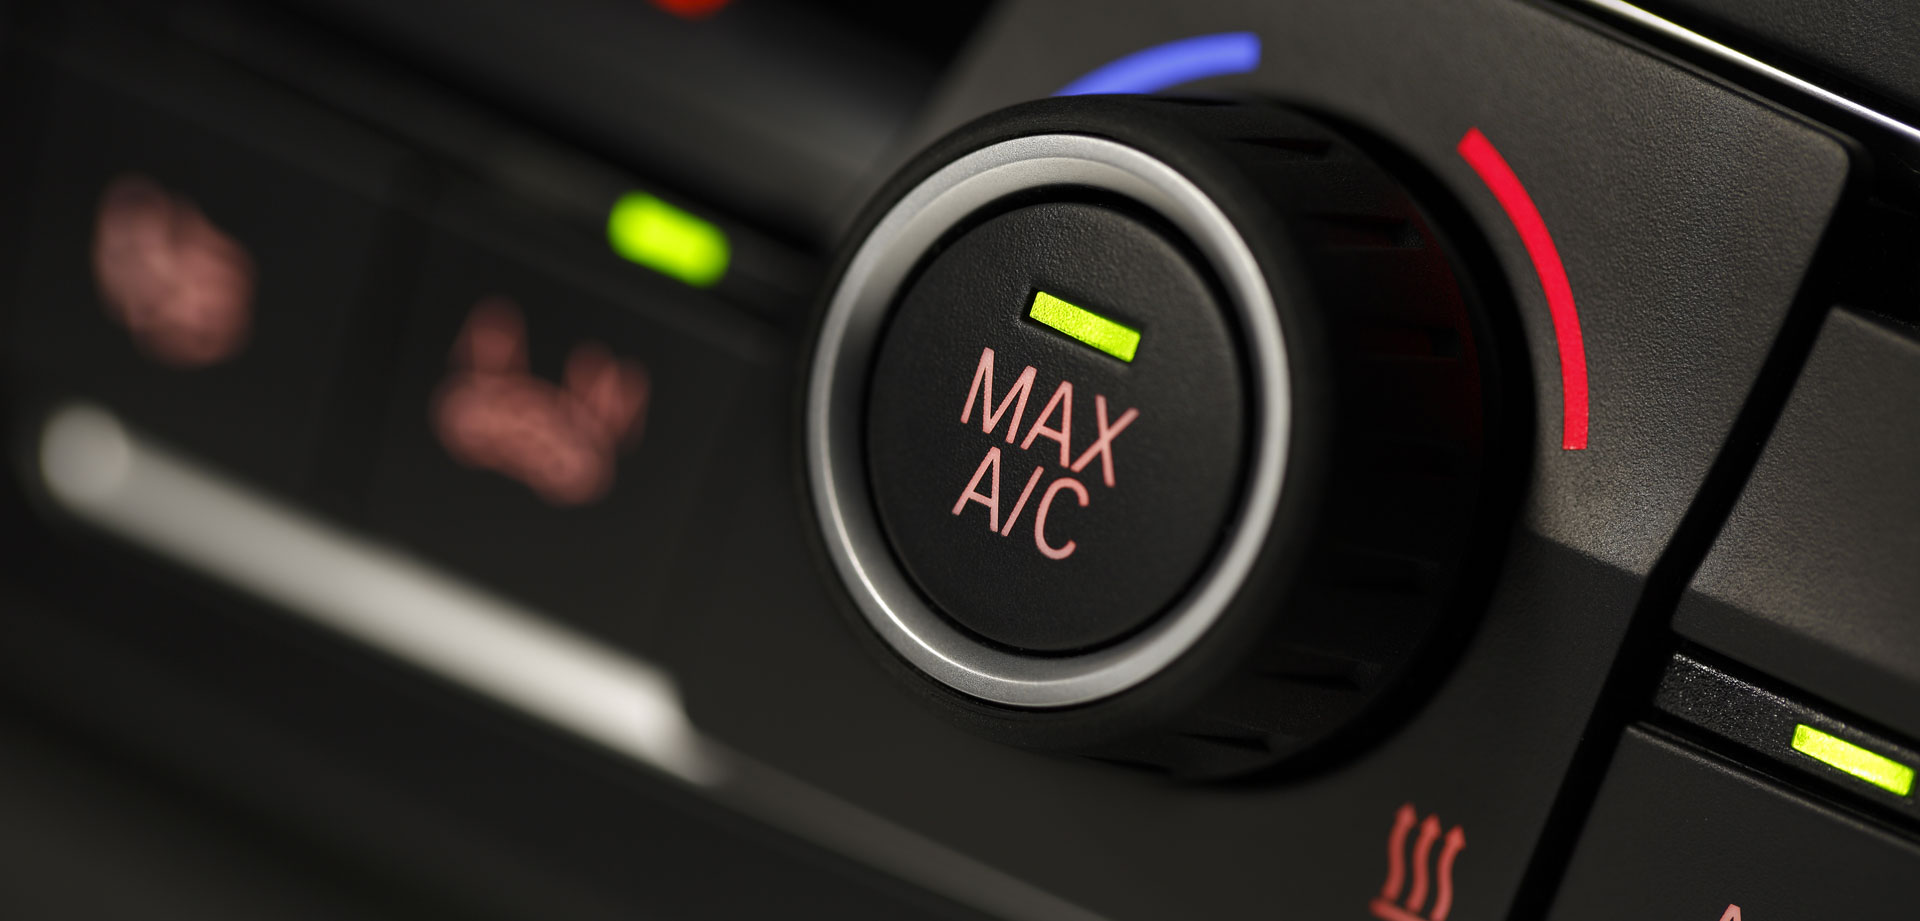 Closeup of Car's A/C knob for adjusting temperature of vehicle